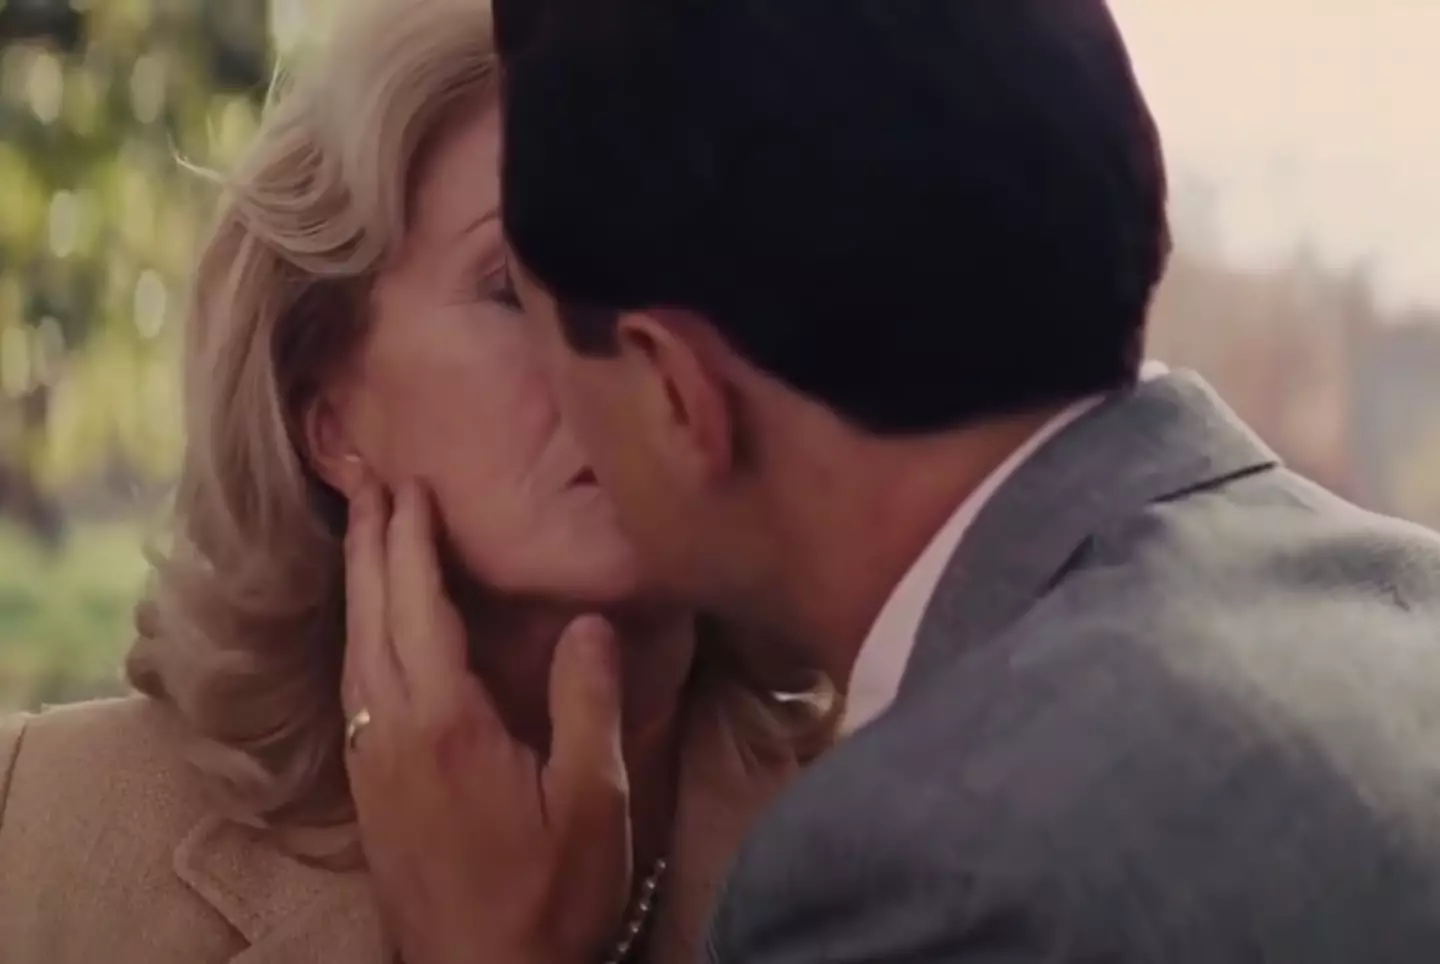 Joanna Lumley said it was no fun kissing Leonardo DiCaprio.